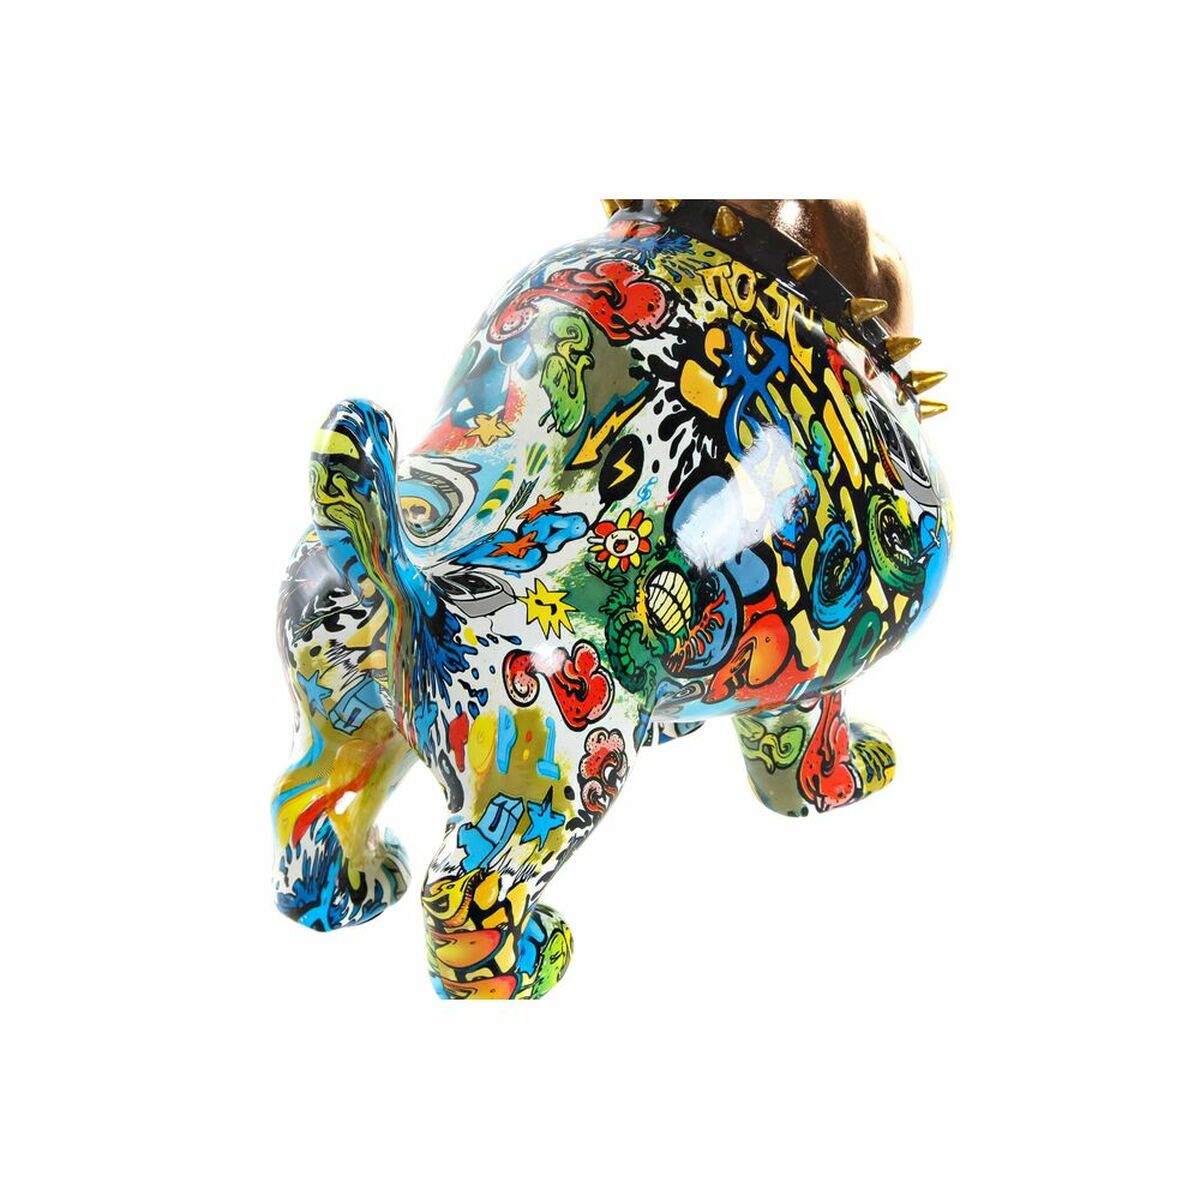 Decorative Figurine Dog Street Art Multicolored (21 x 15.5 x 20.5 cm)